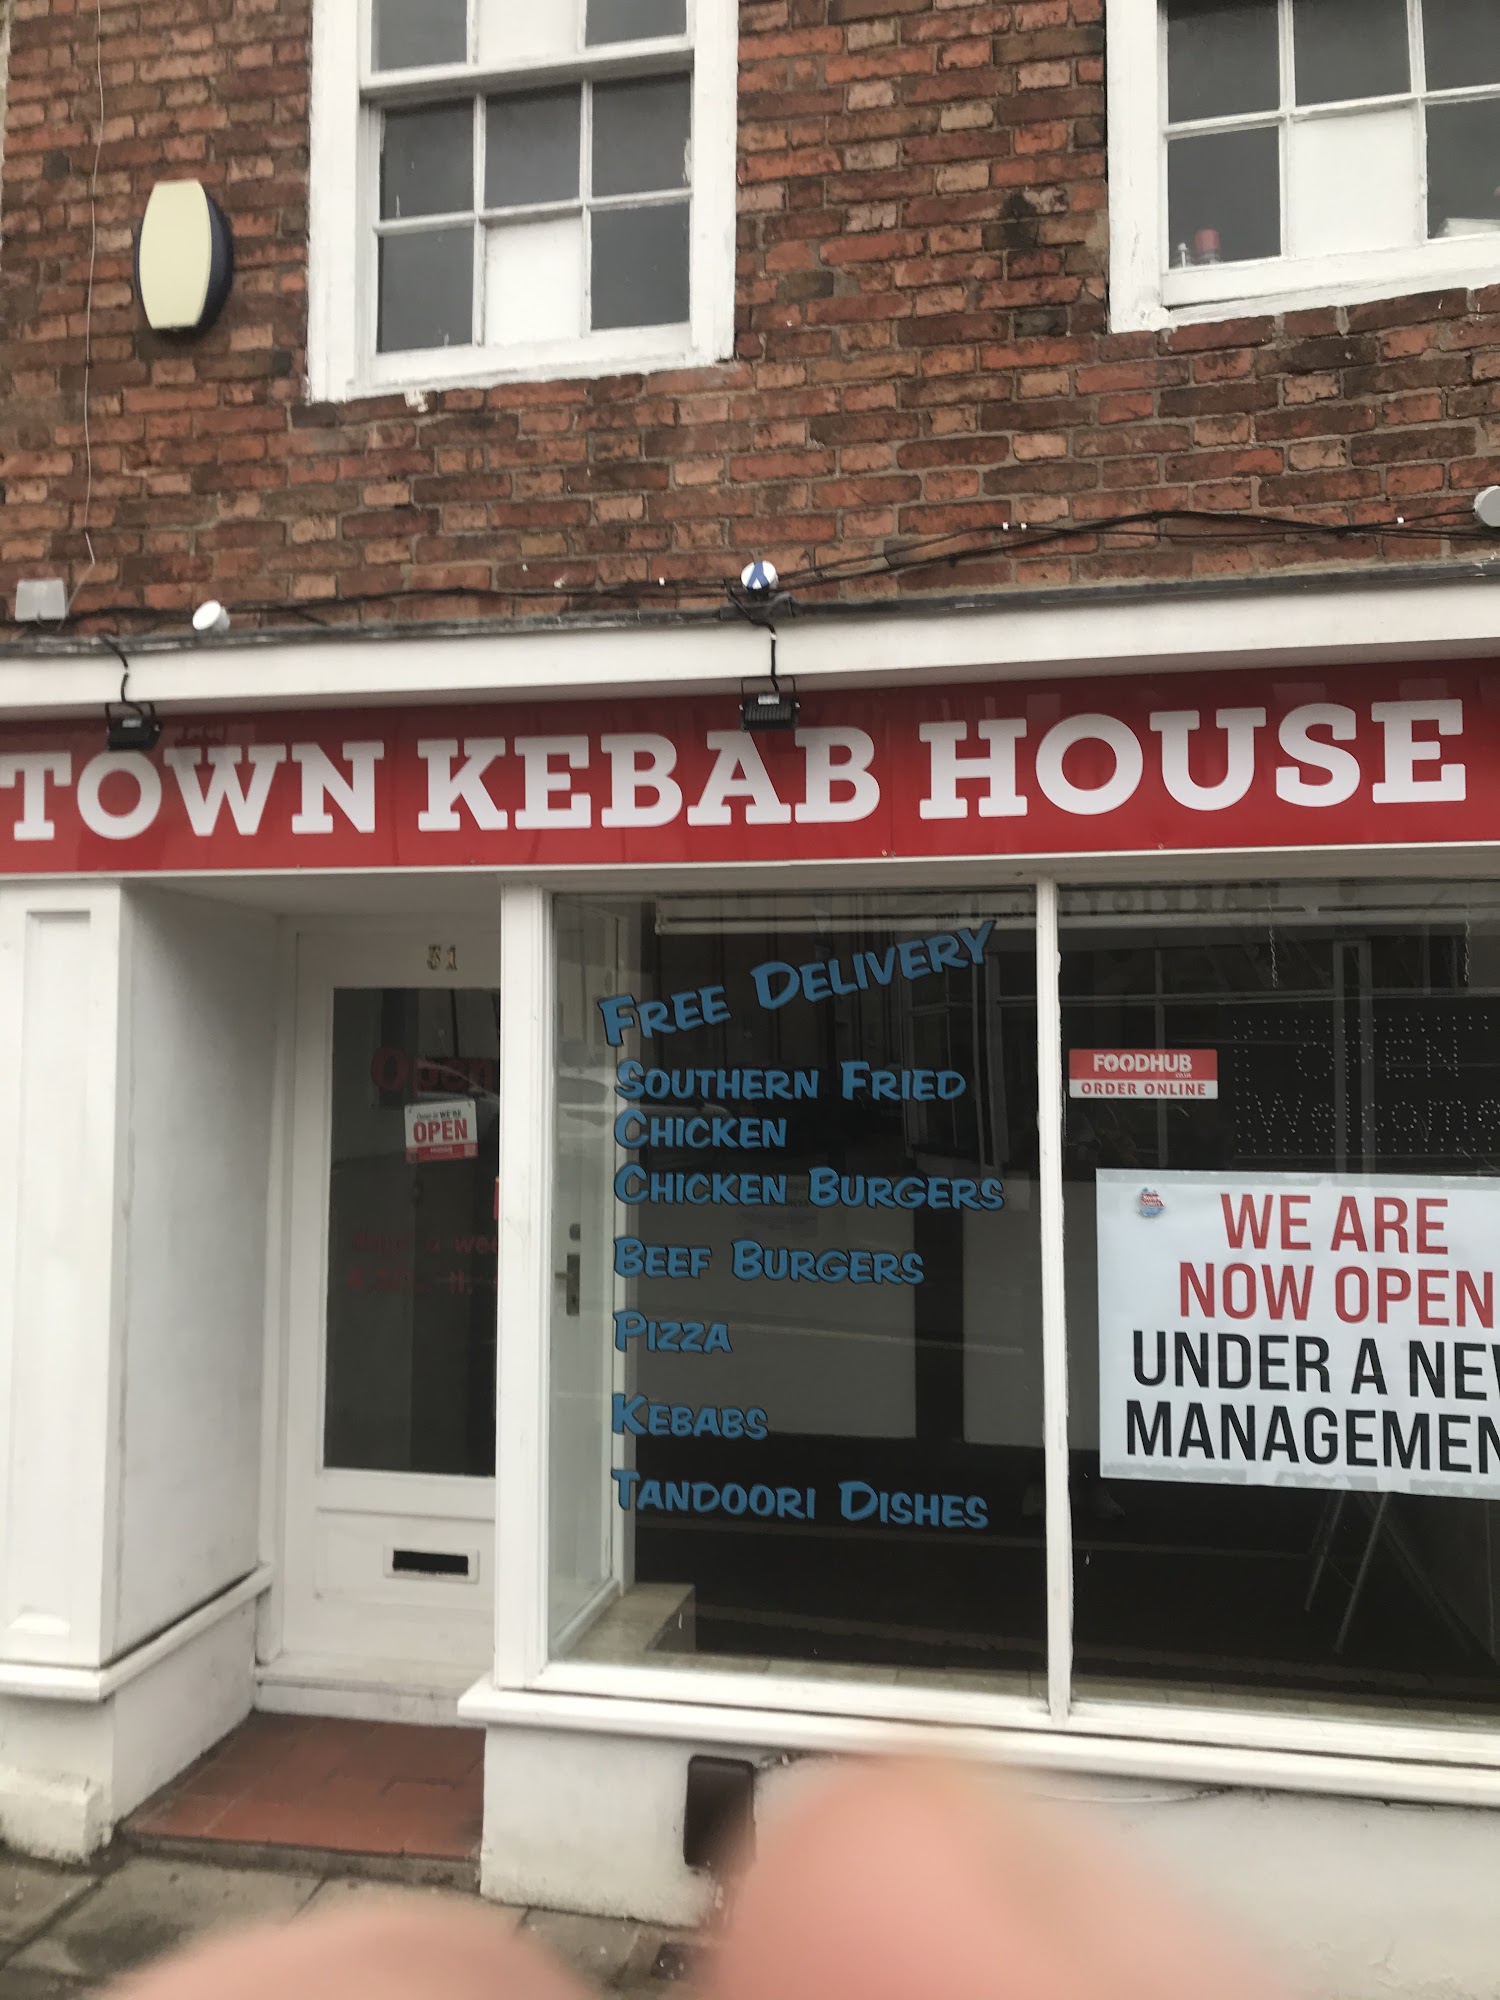 Town Kebab House